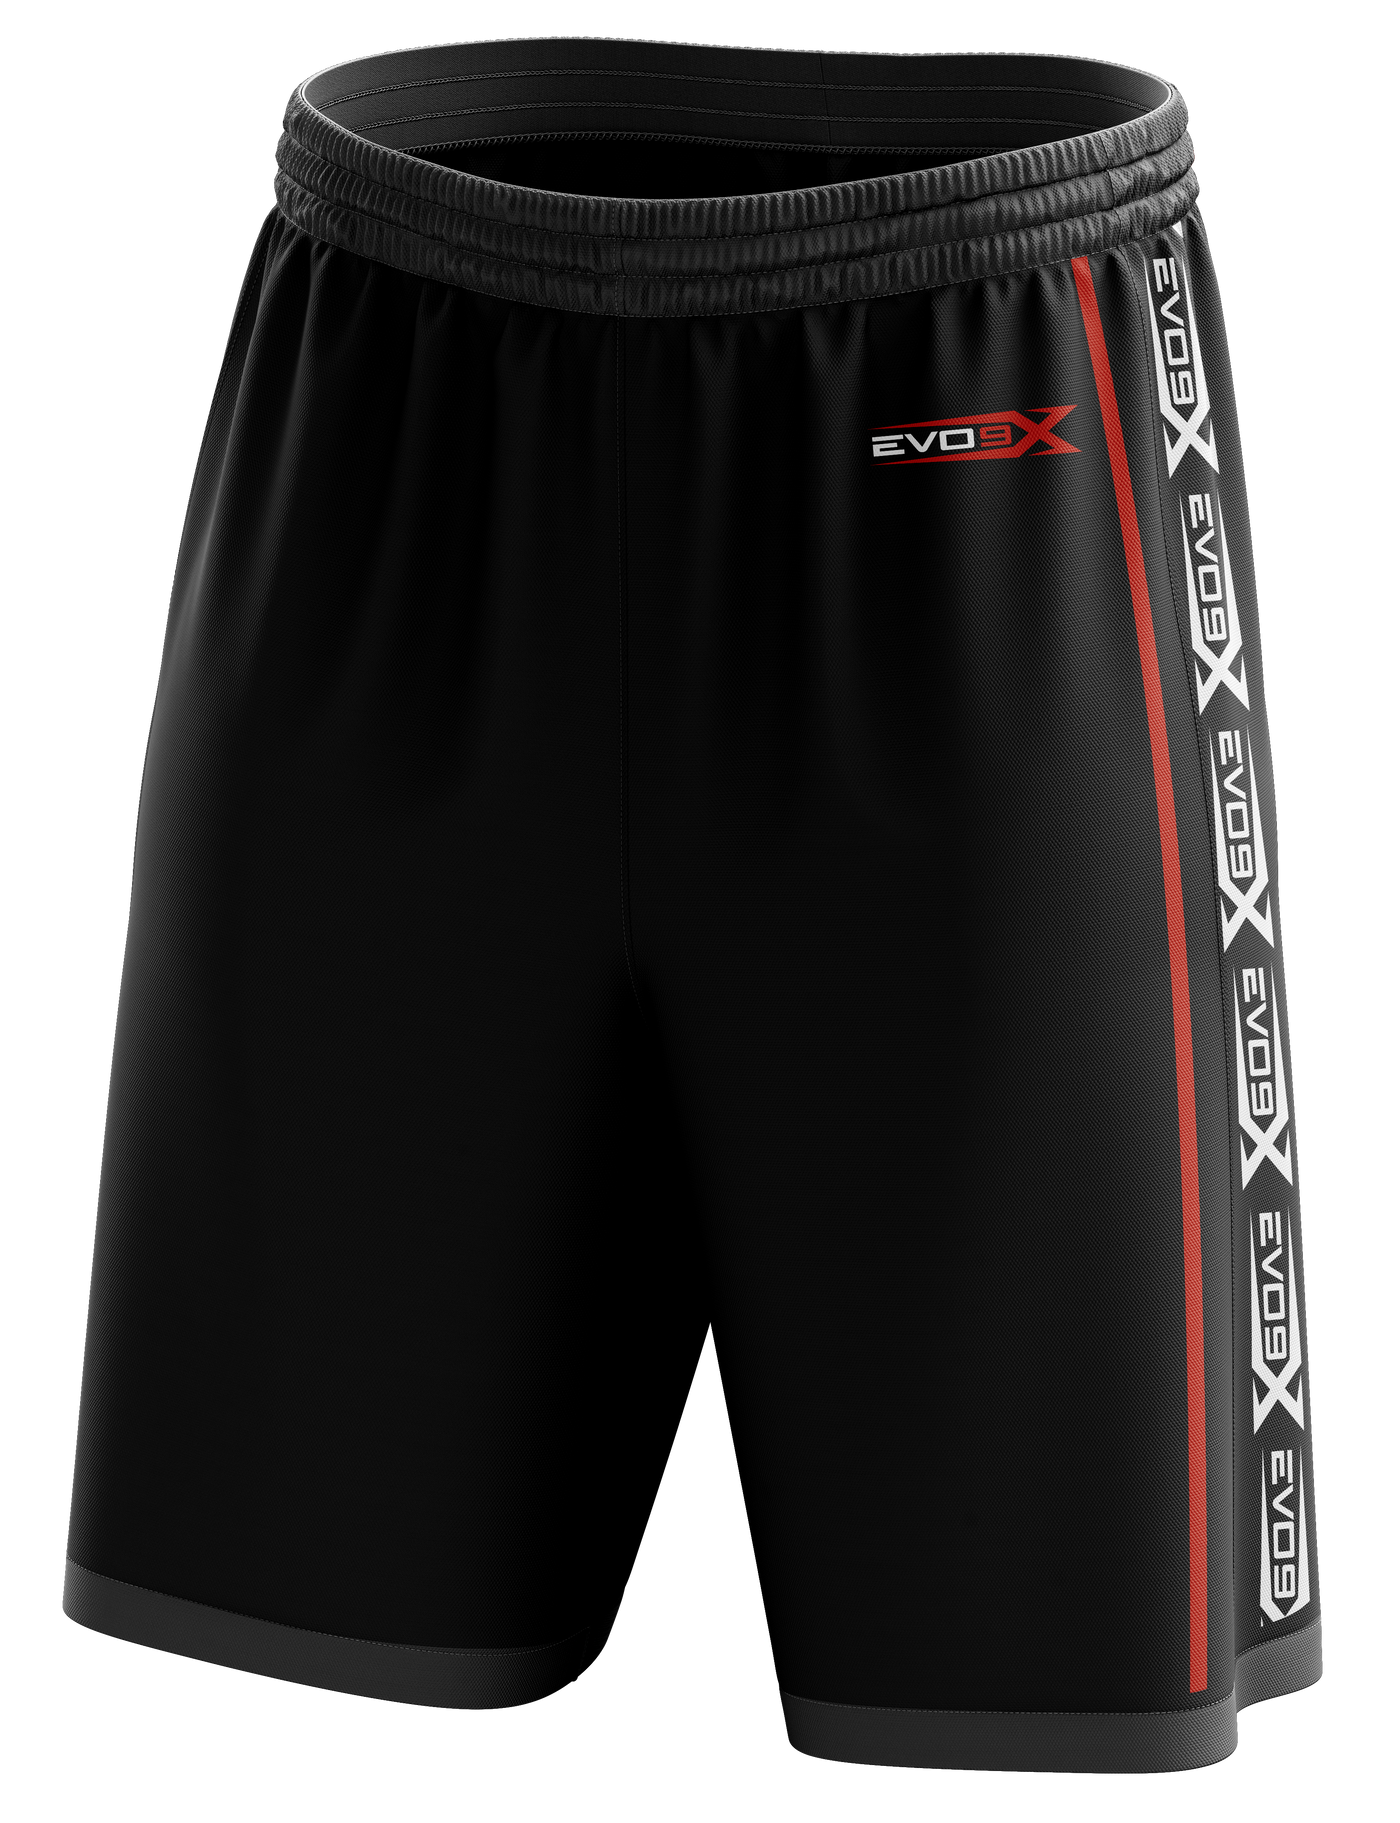 Custom Shorts Design